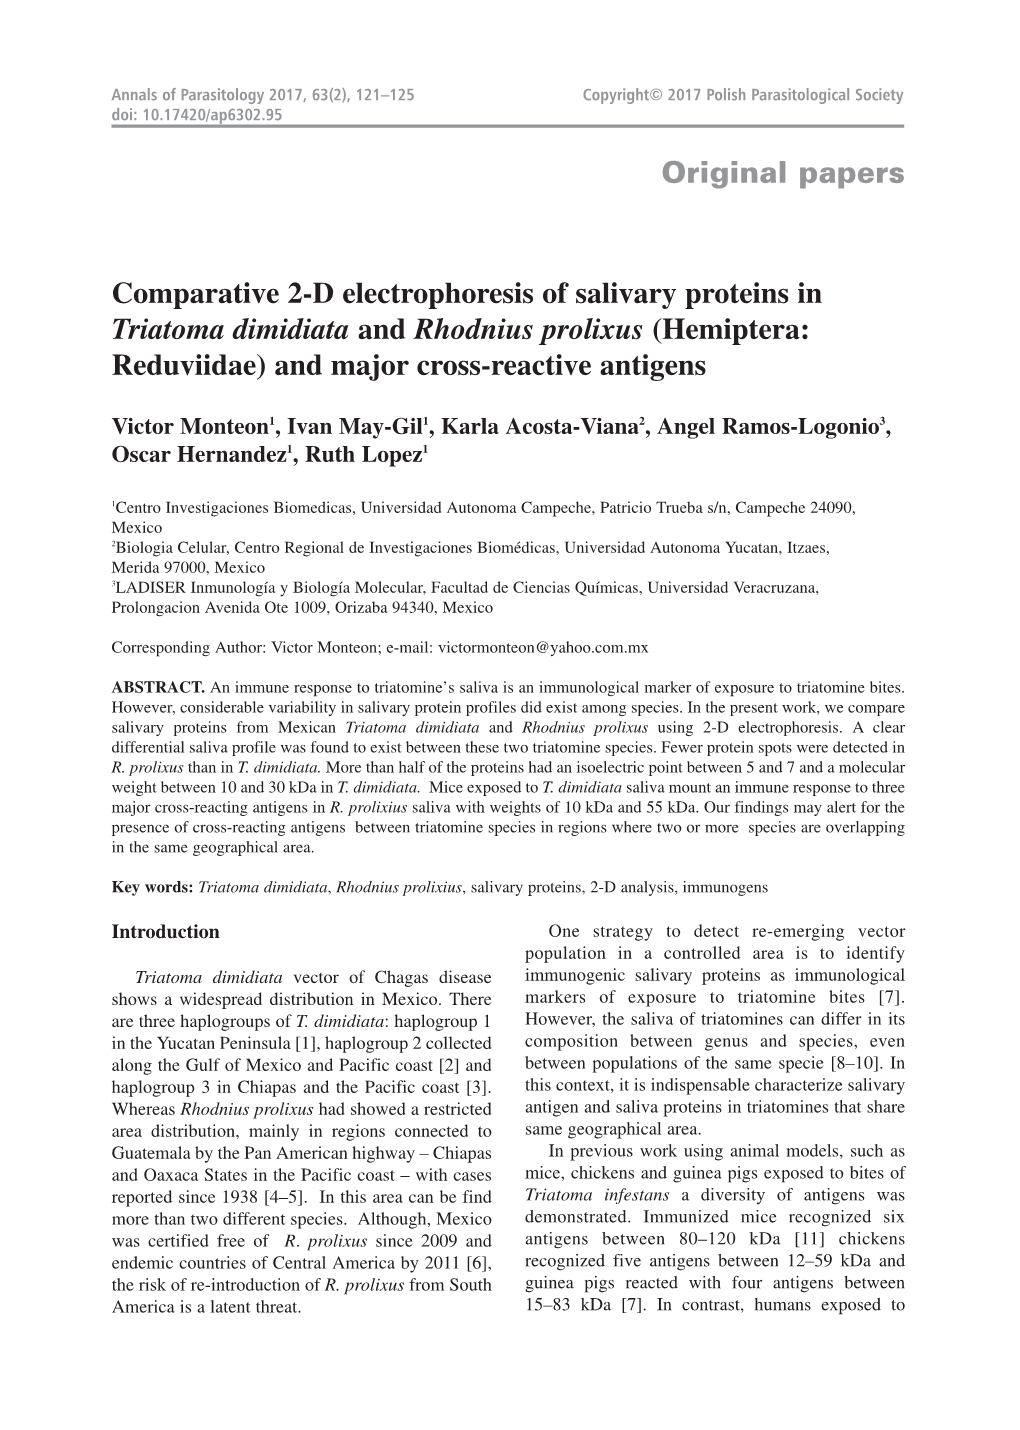 Comparative 2-D Electrophoresis of Salivary Proteins in Triatoma Dimidiata and Rhodnius Prolixus (Hemiptera: Reduviidae) and Major Cross-Reactive Antigens